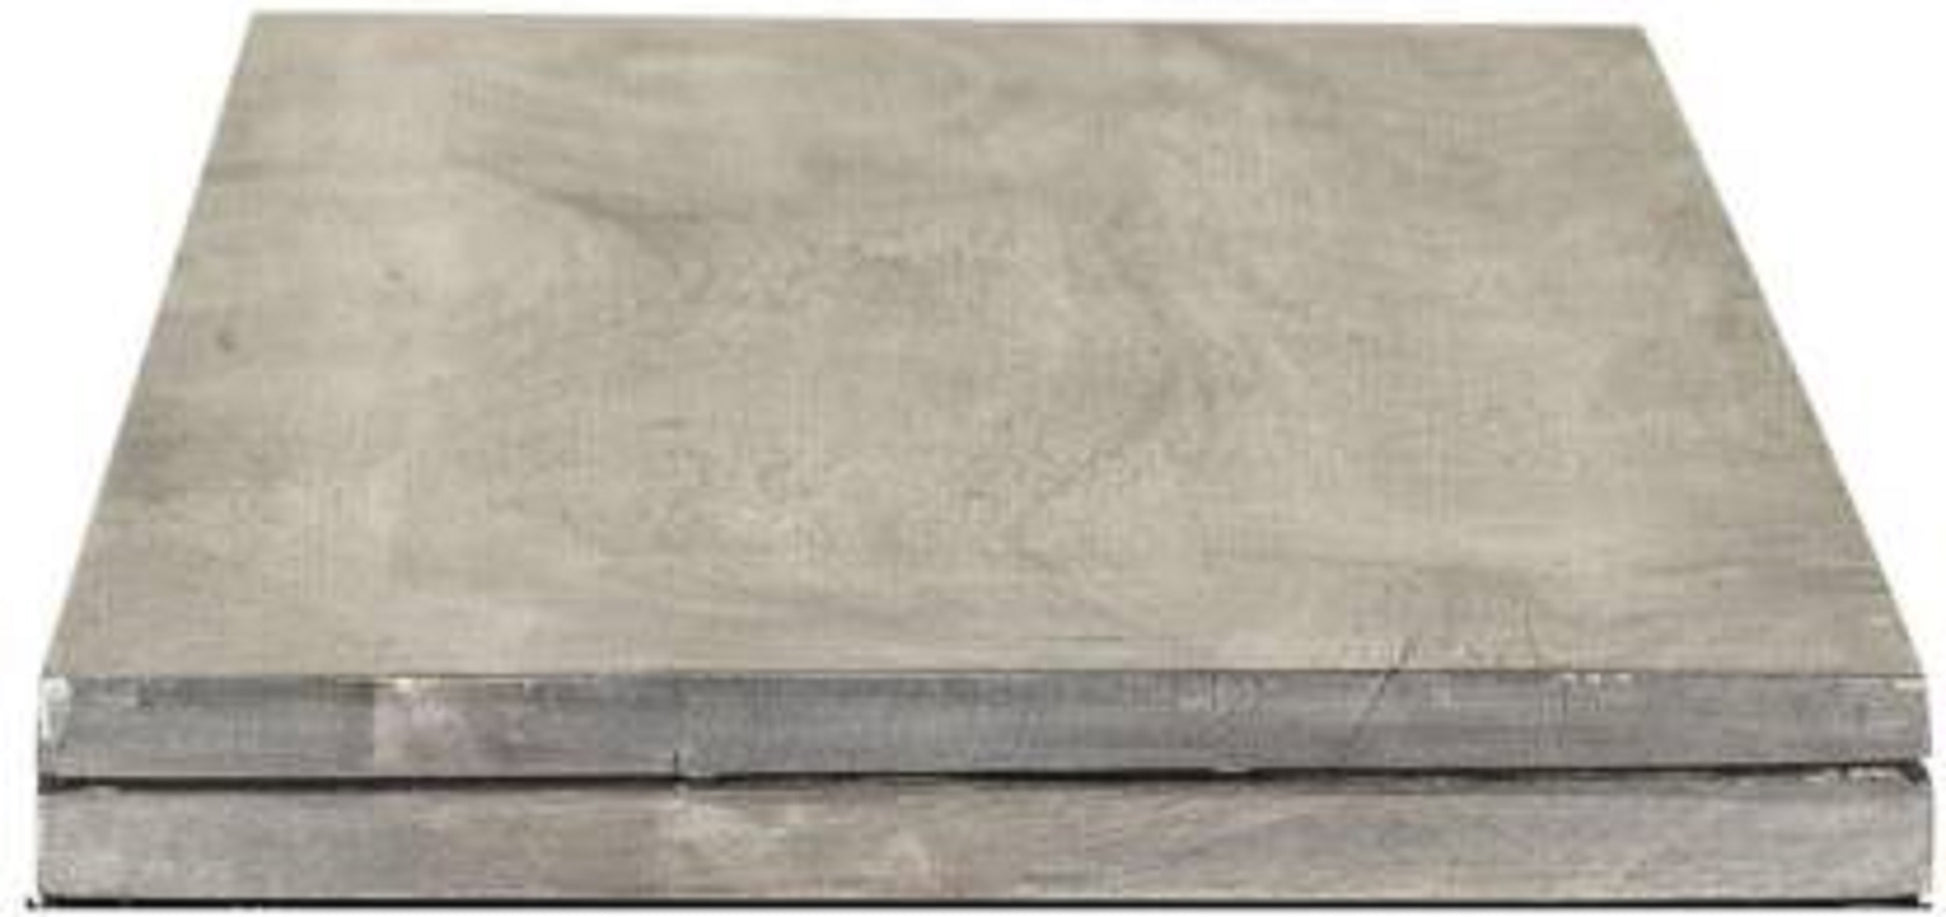 Townsville Solid Wood Bedside Table - Grey Finish - metallikafurniture.com